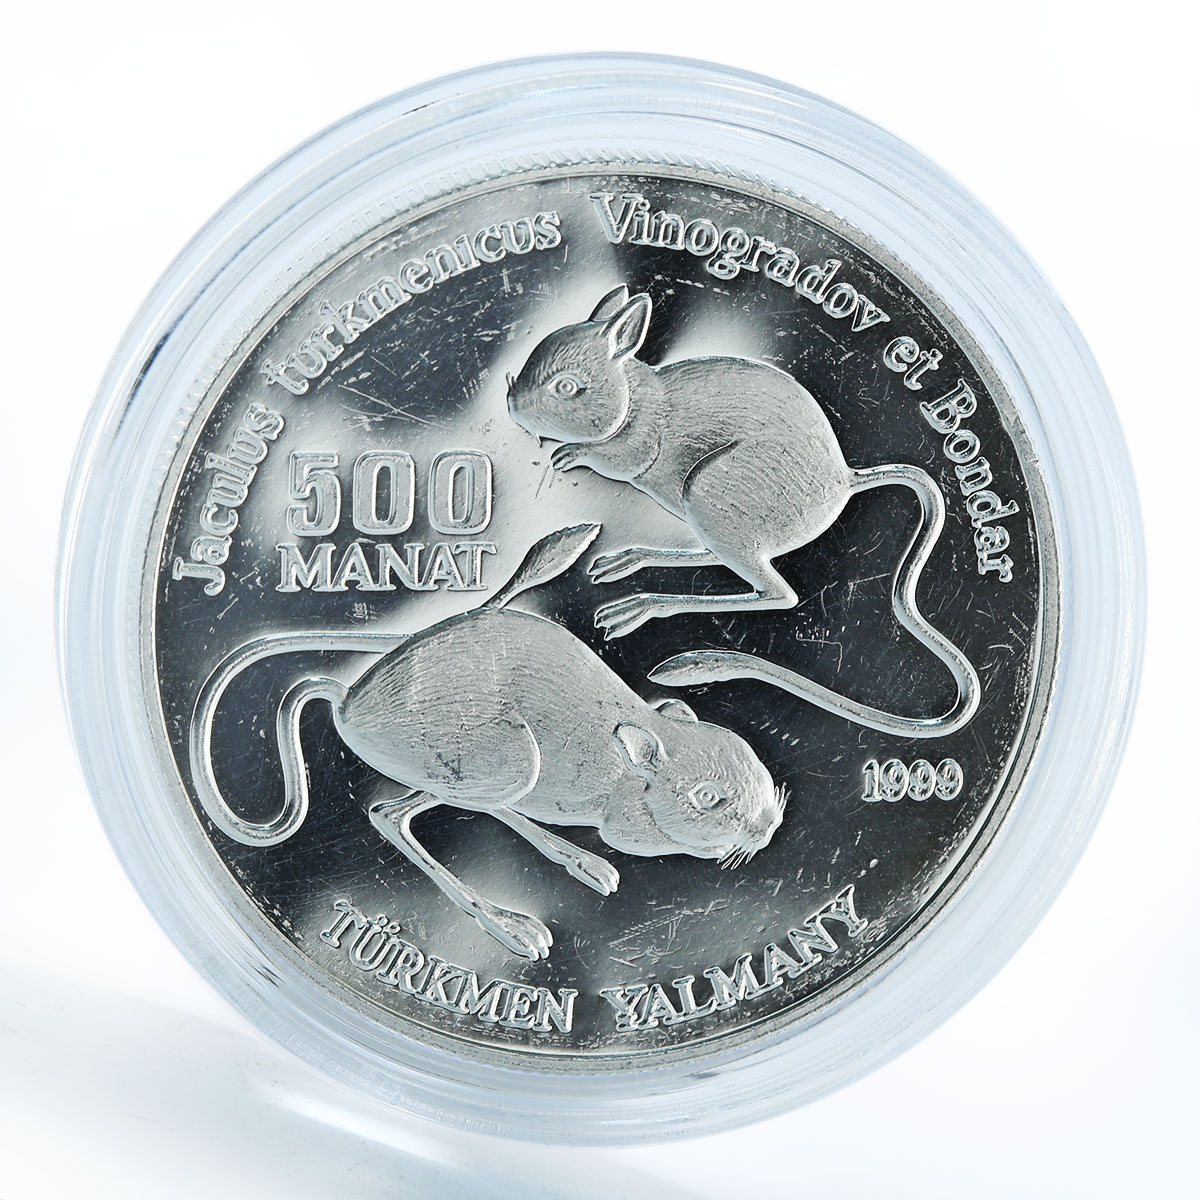 Turkmenistan 500 manat Red Book Turkmenistan Jerboa proof silver coin 1999